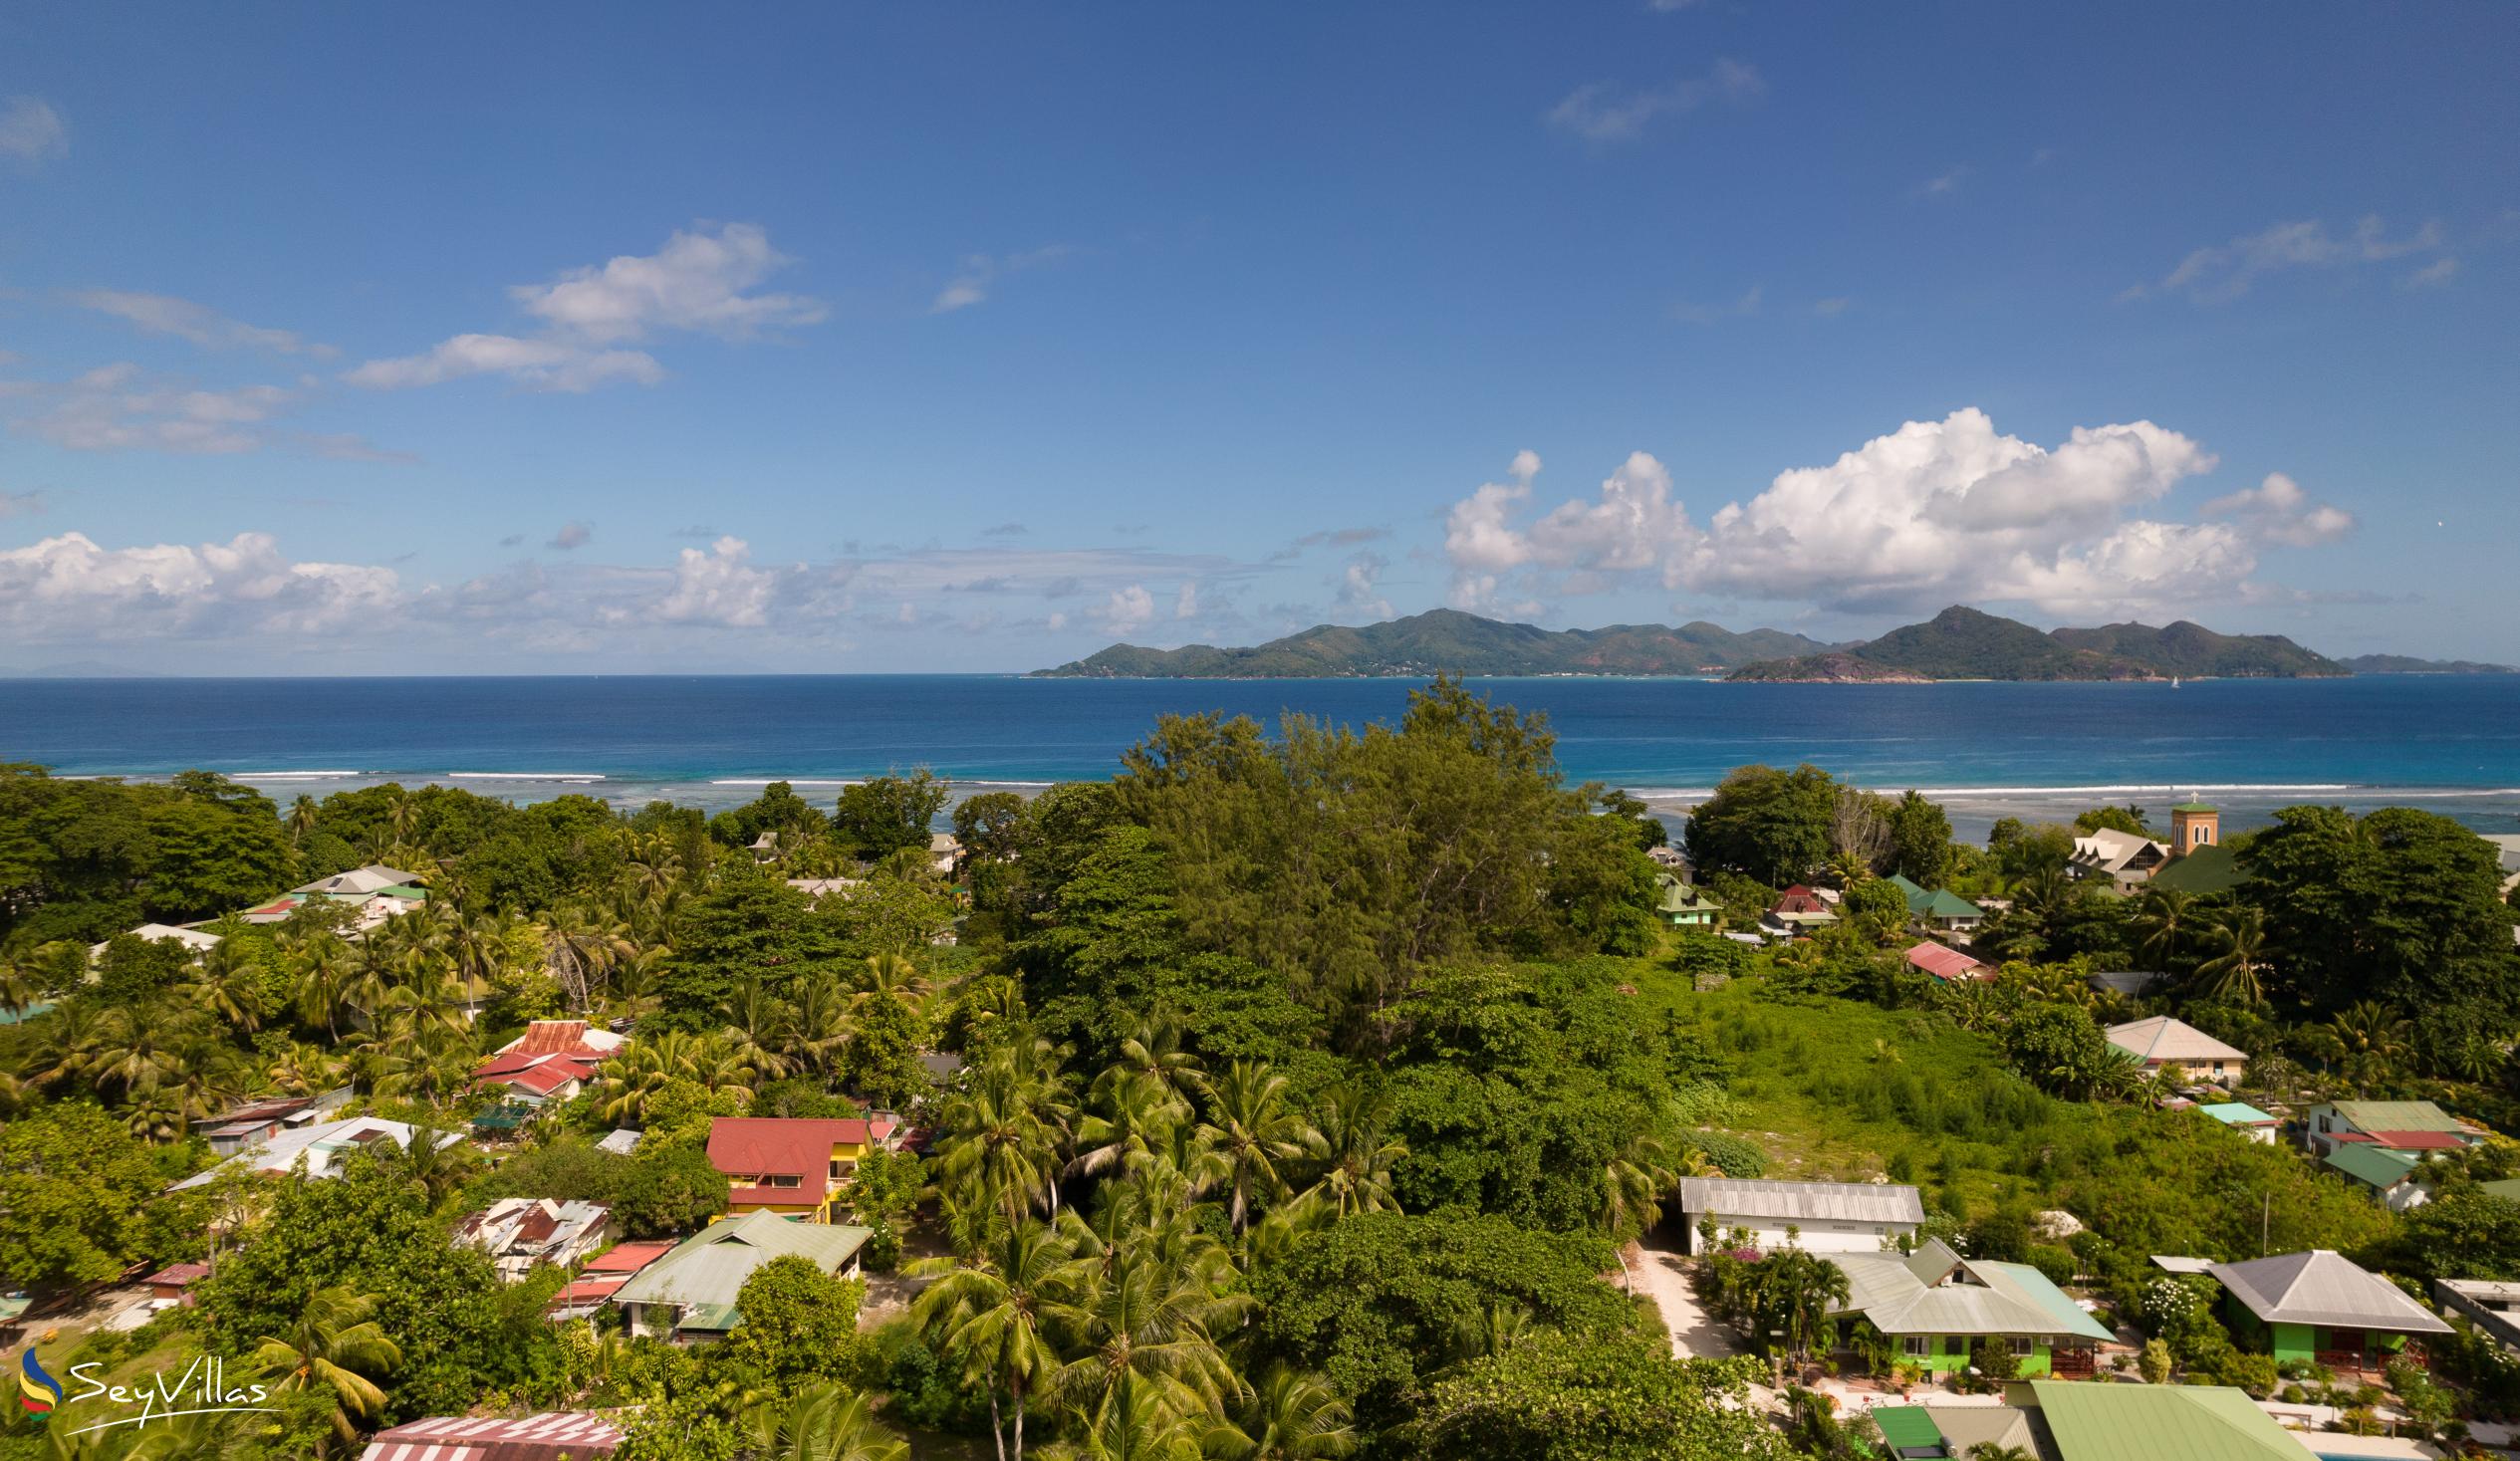 Foto 30: Coco de Mahi - Posizione - La Digue (Seychelles)